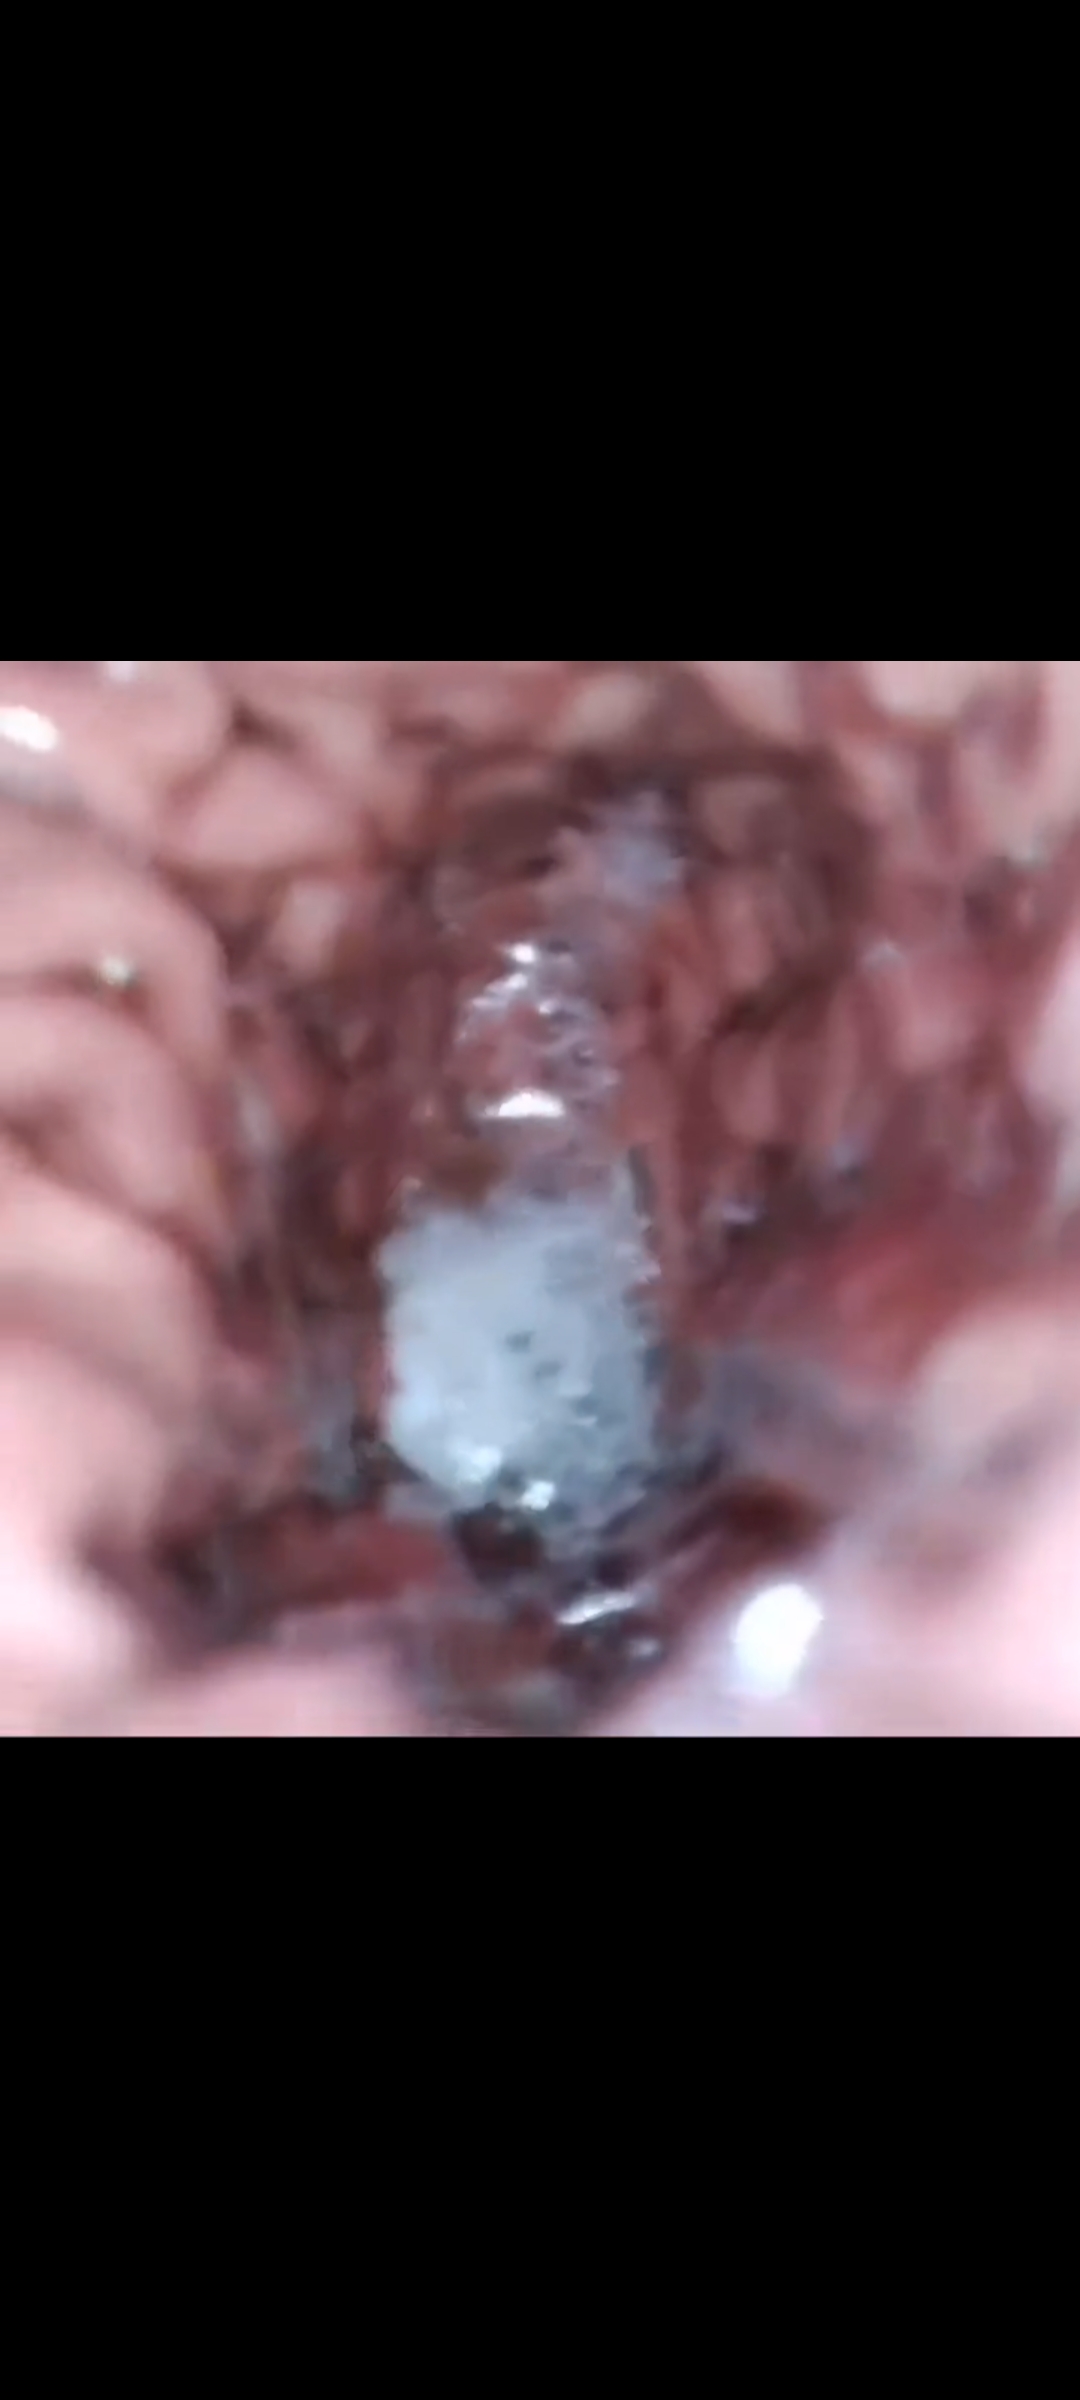 inside stomach - video 2